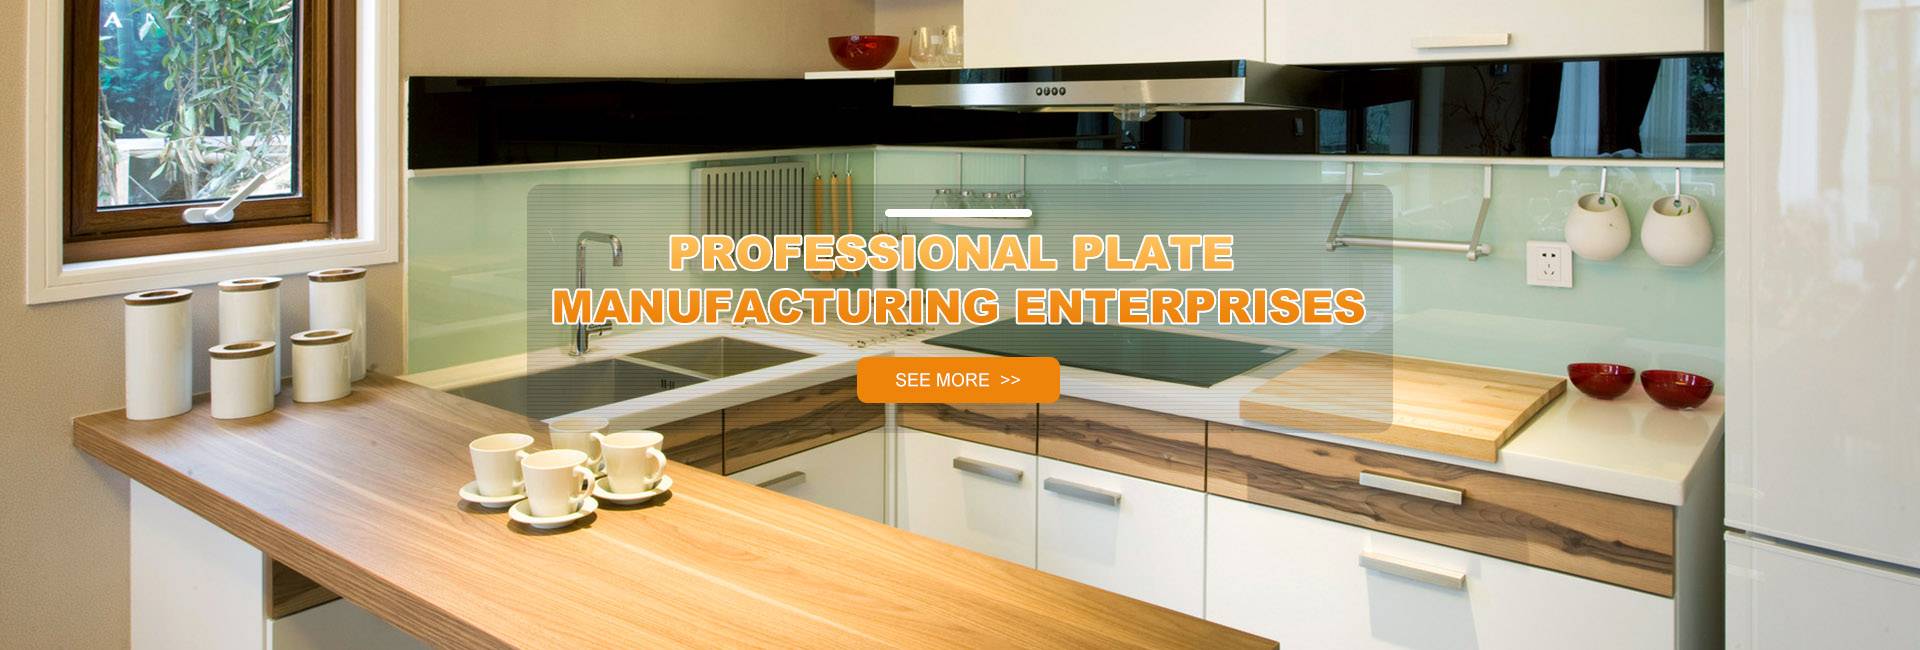 Professional Plate Manufacturing Enterprises